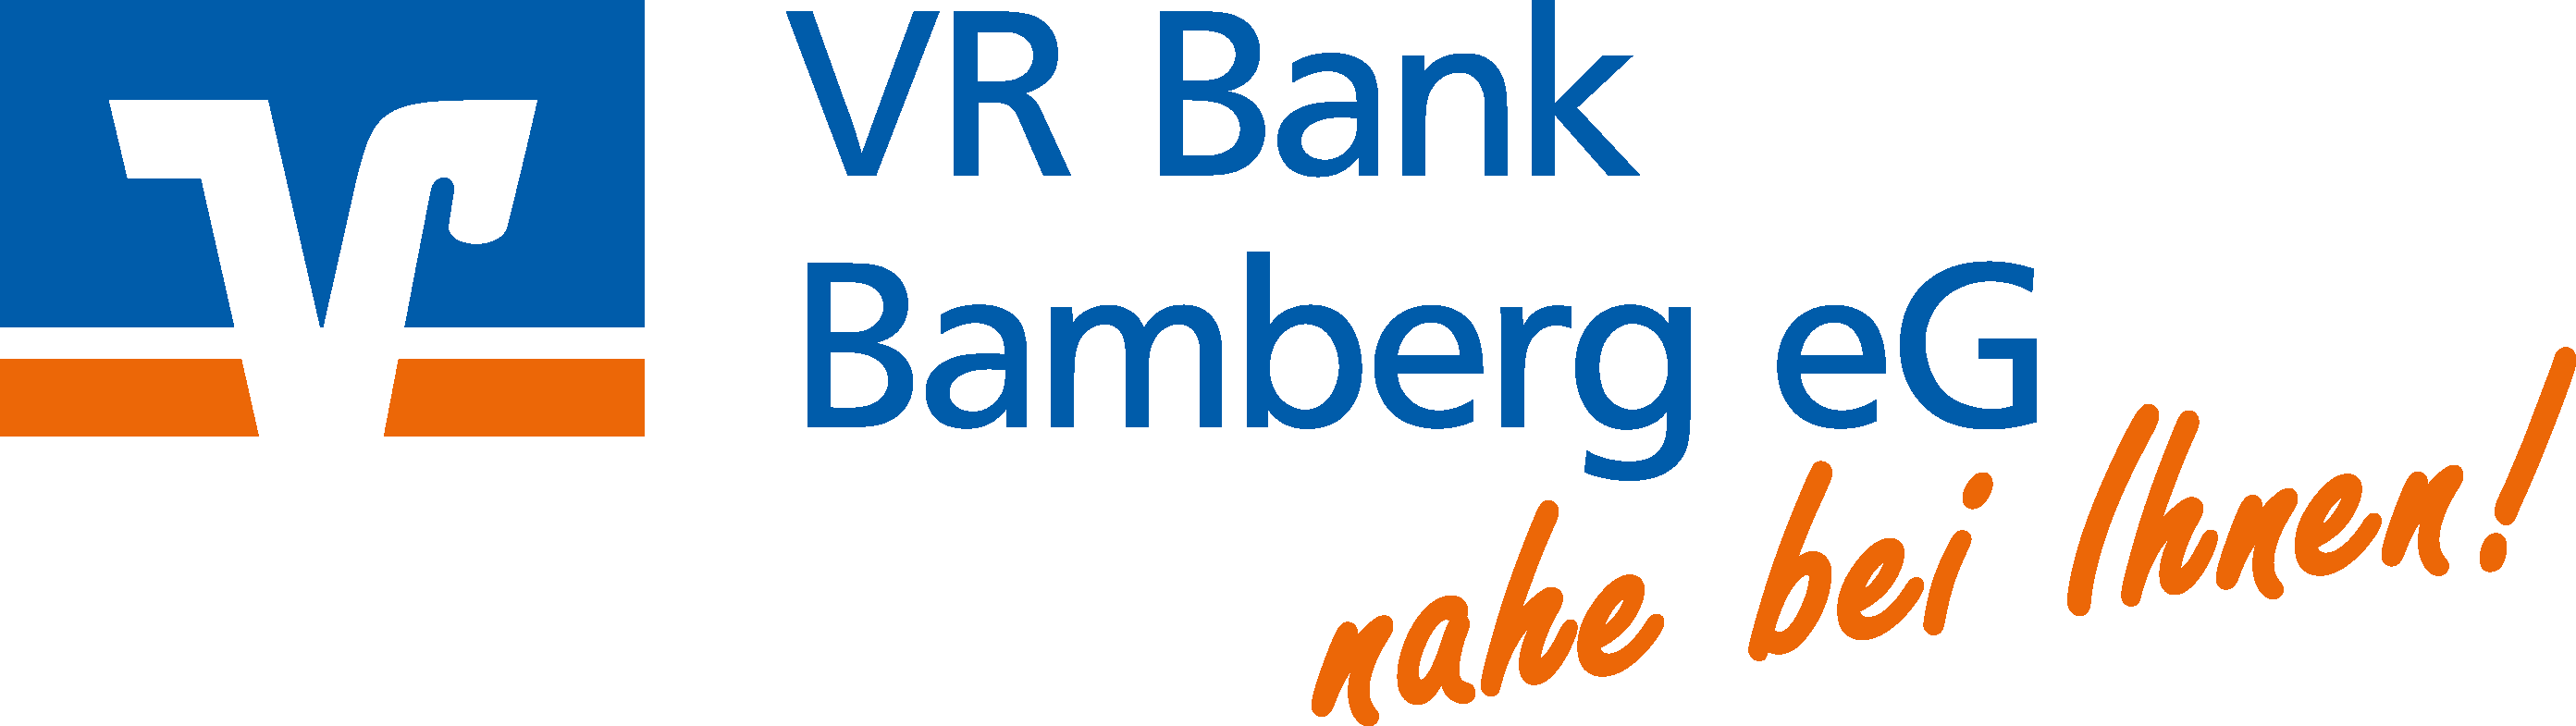 VRbank_logo_slogan_4c